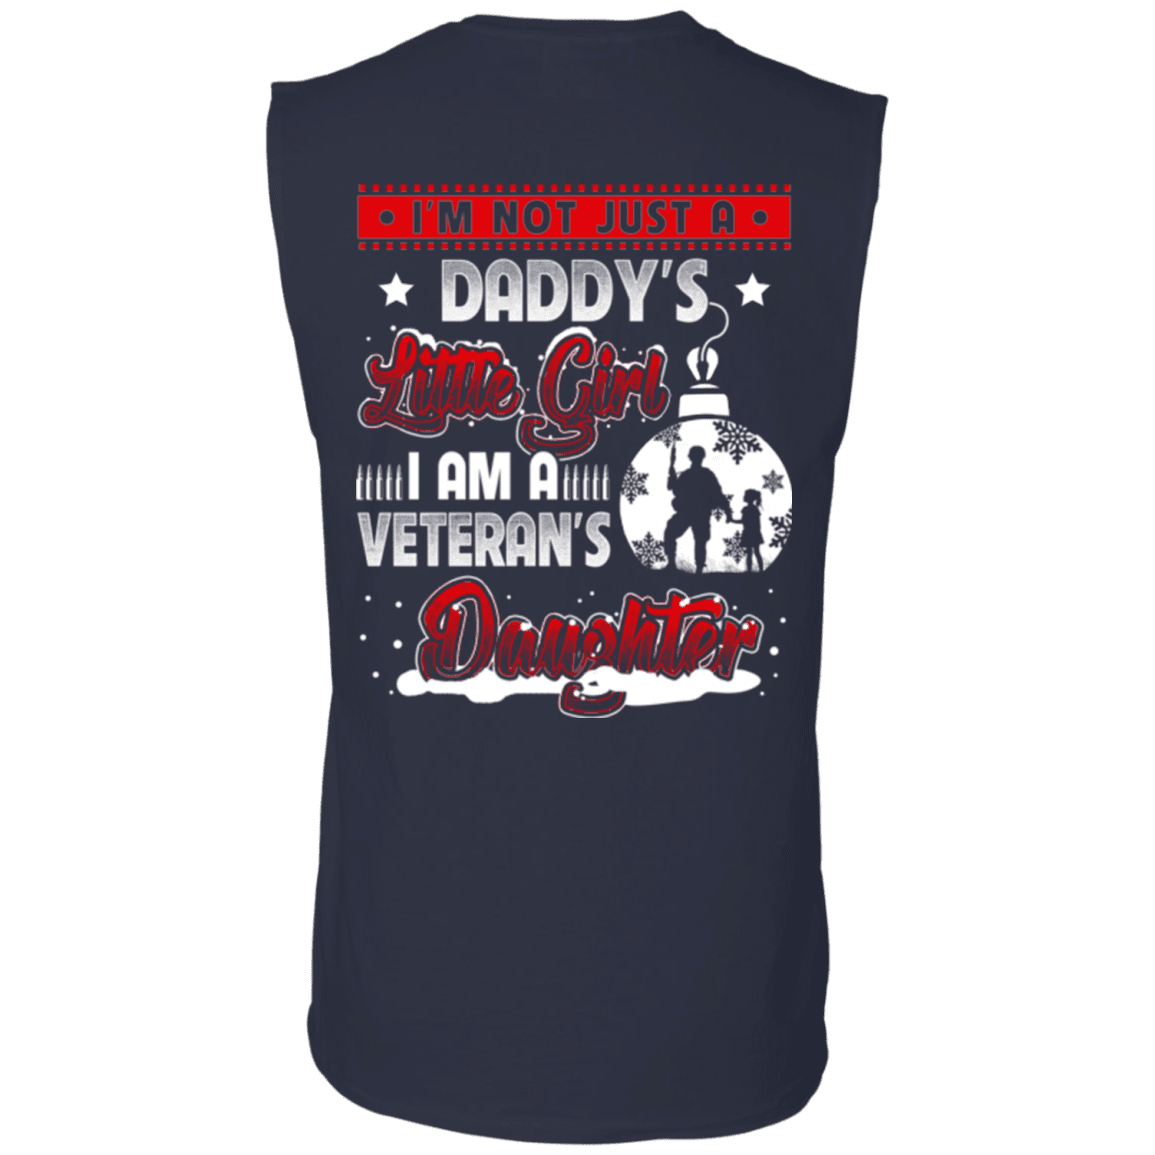 Military T-Shirt "I Am A Veteran's Daughter"-TShirt-General-Veterans Nation